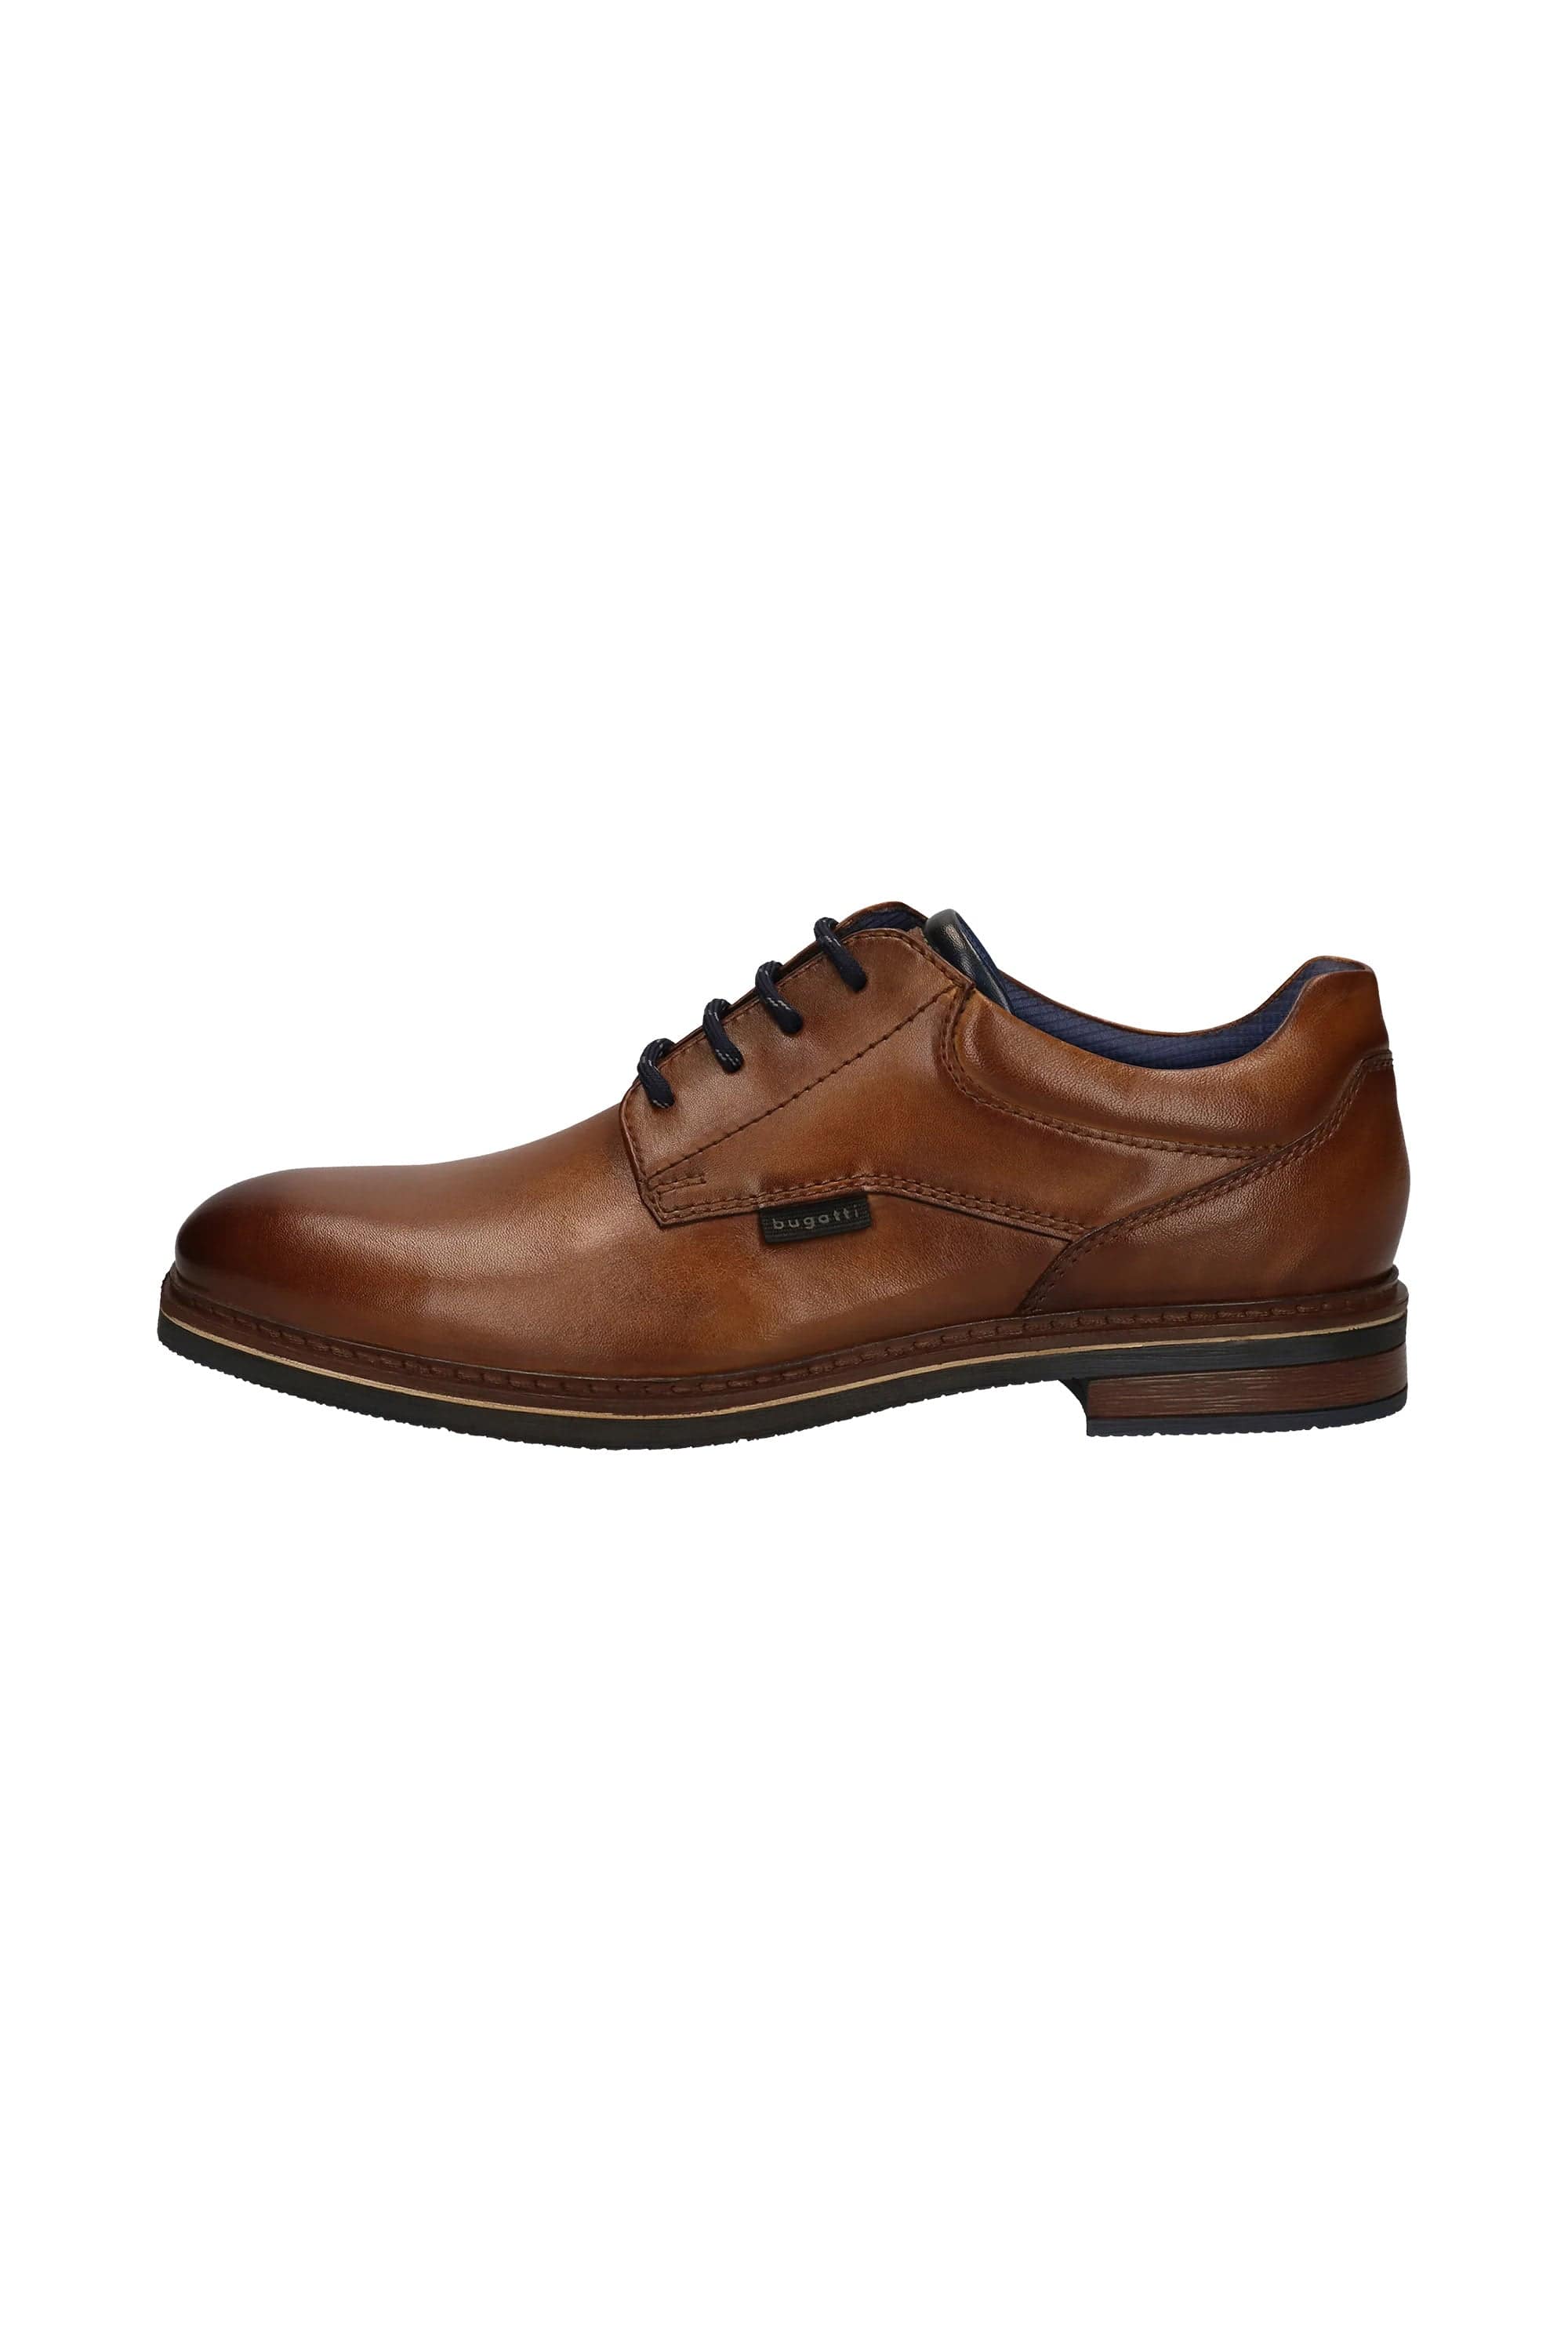 Bugatti Maik Exko Extra Comfort Leather Shoe - Cognac – Potters of Buxton